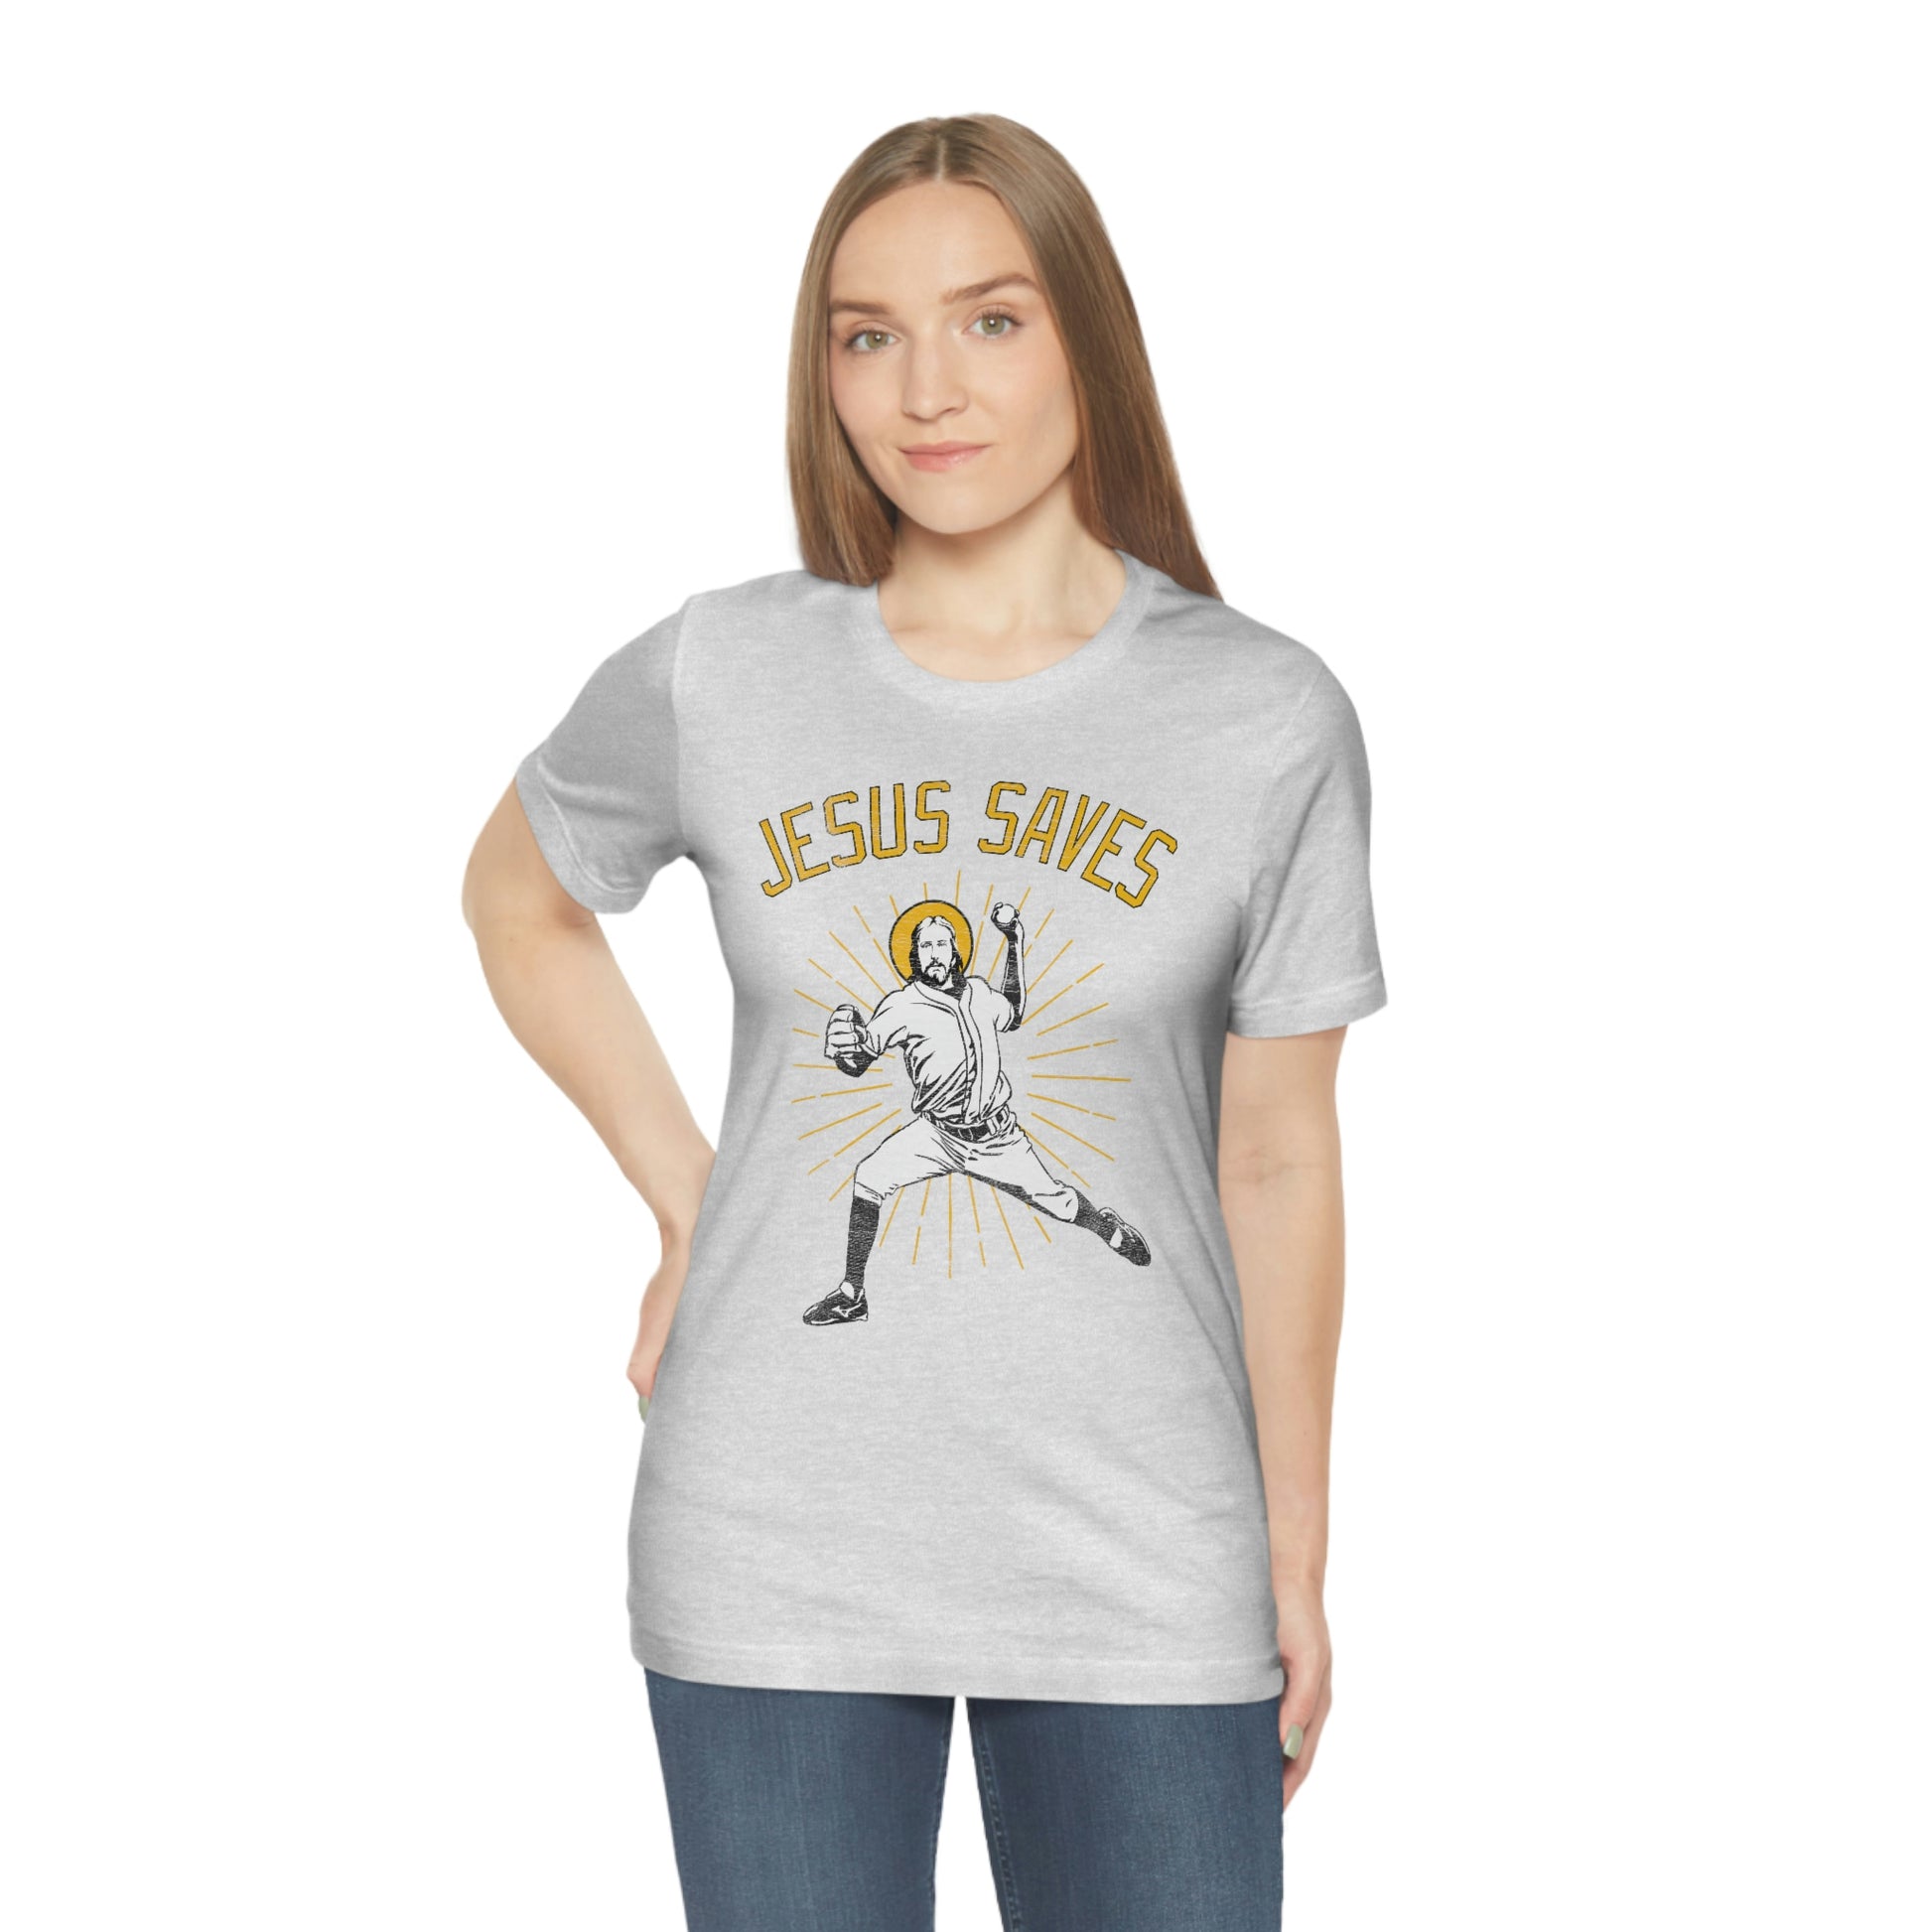 Jesus Is My Protector Christian Sayings' Unisex Baseball T-Shirt